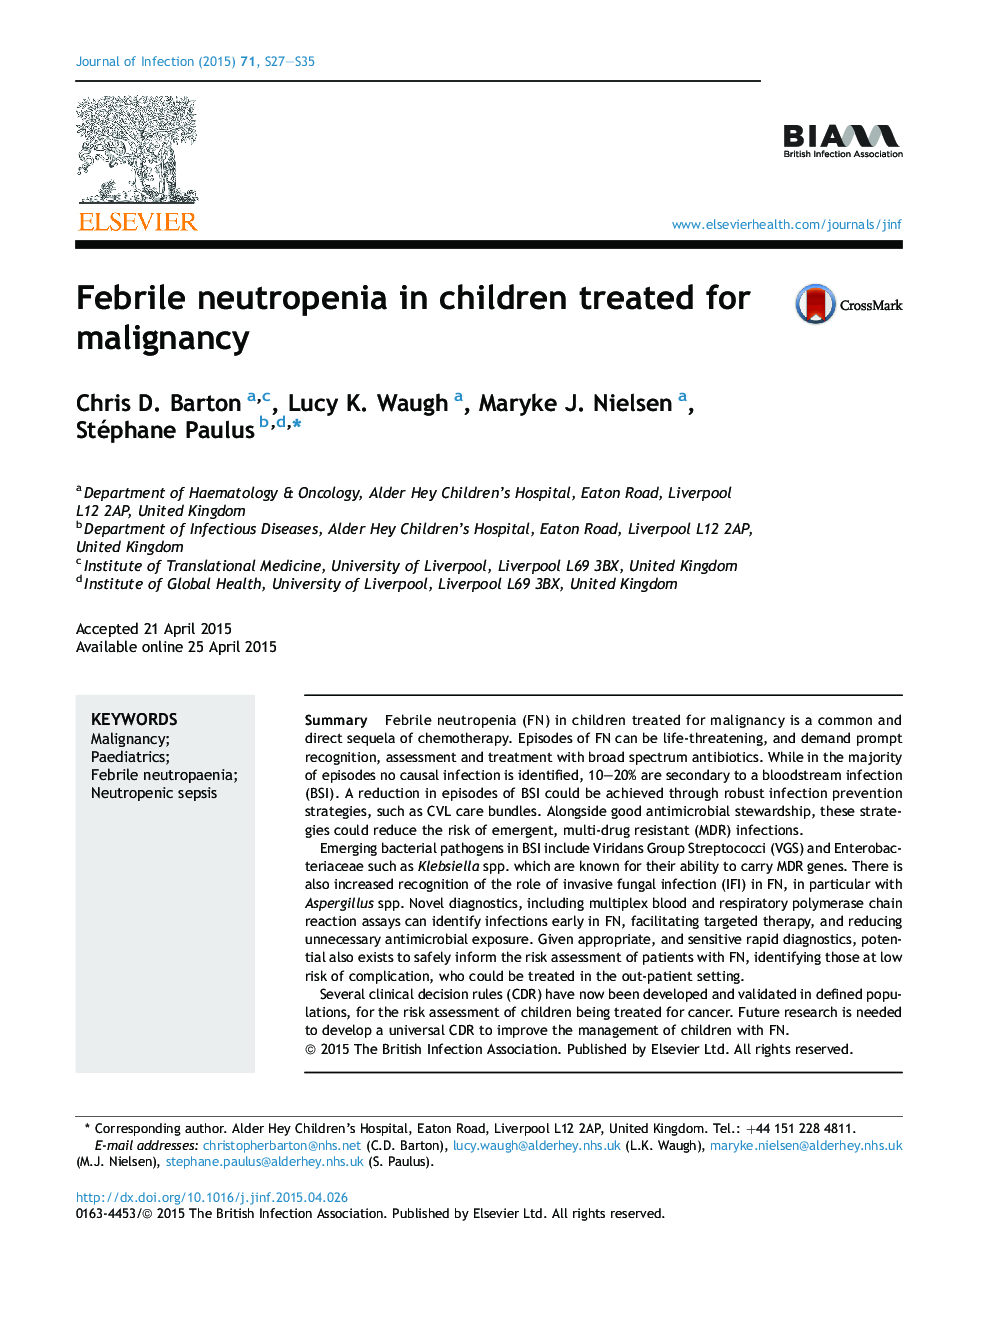 Febrile neutropenia in children treated for malignancy